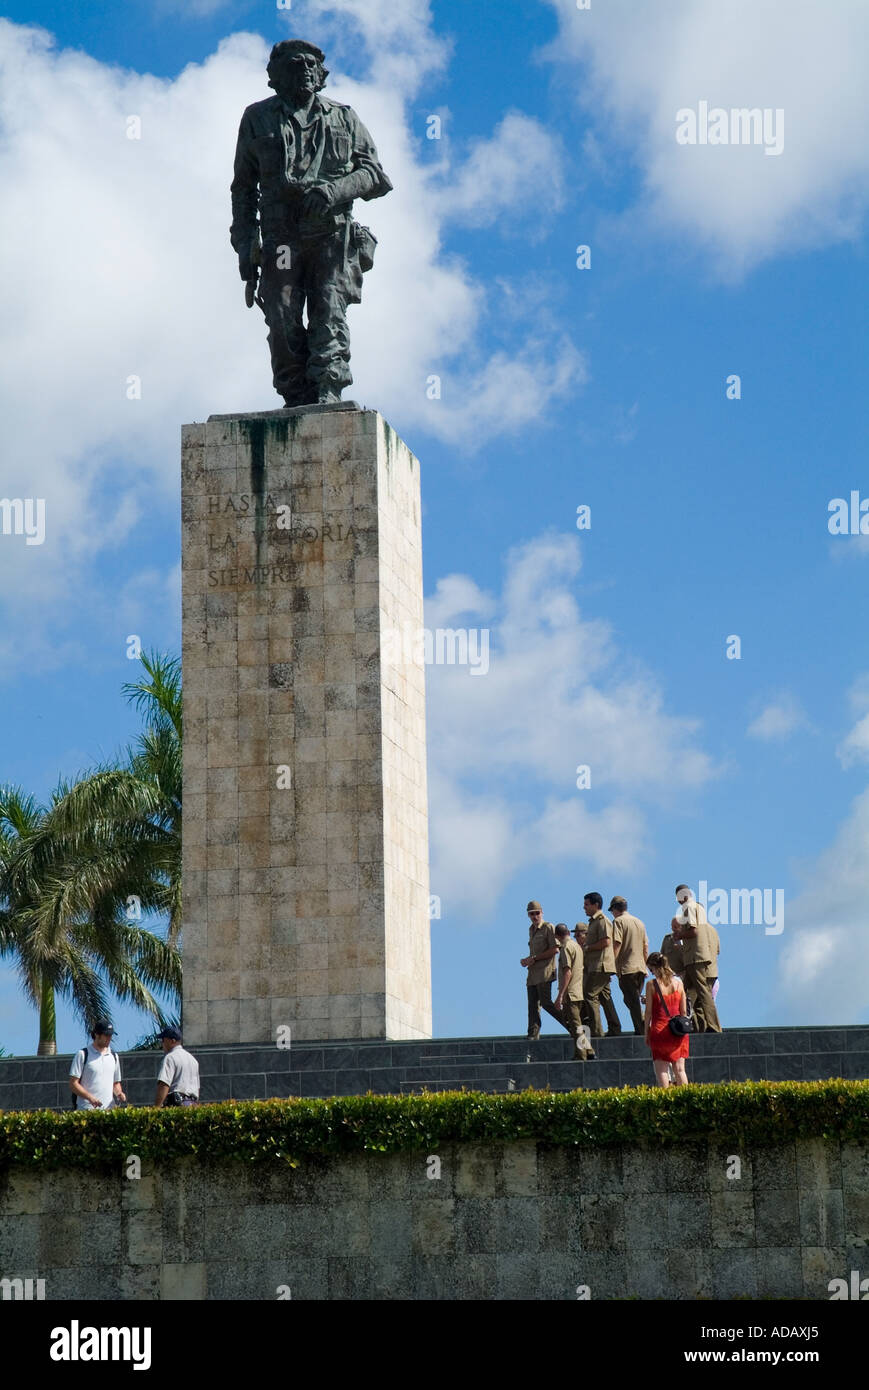 Che Guevara Memorial Statue on the Plaza de la Revolucion, Santa Clara, Villa Clara, Cuba. Stock Photo